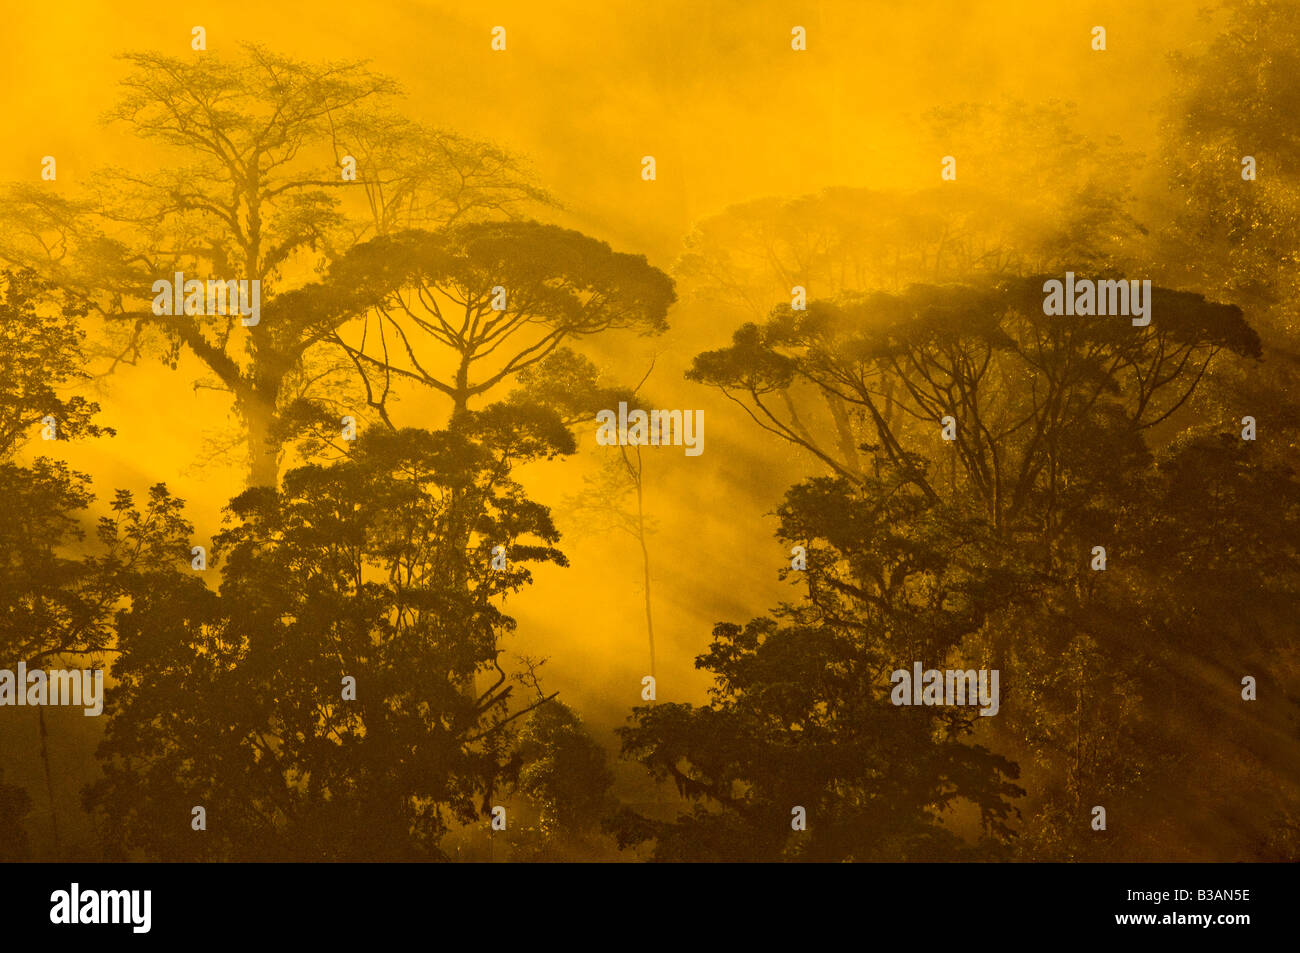 COSTA RICA, Rainforest paisaje de rayos de sol se filtran a través de la luz de la mañana temprano en el bosque tropical Foto de stock